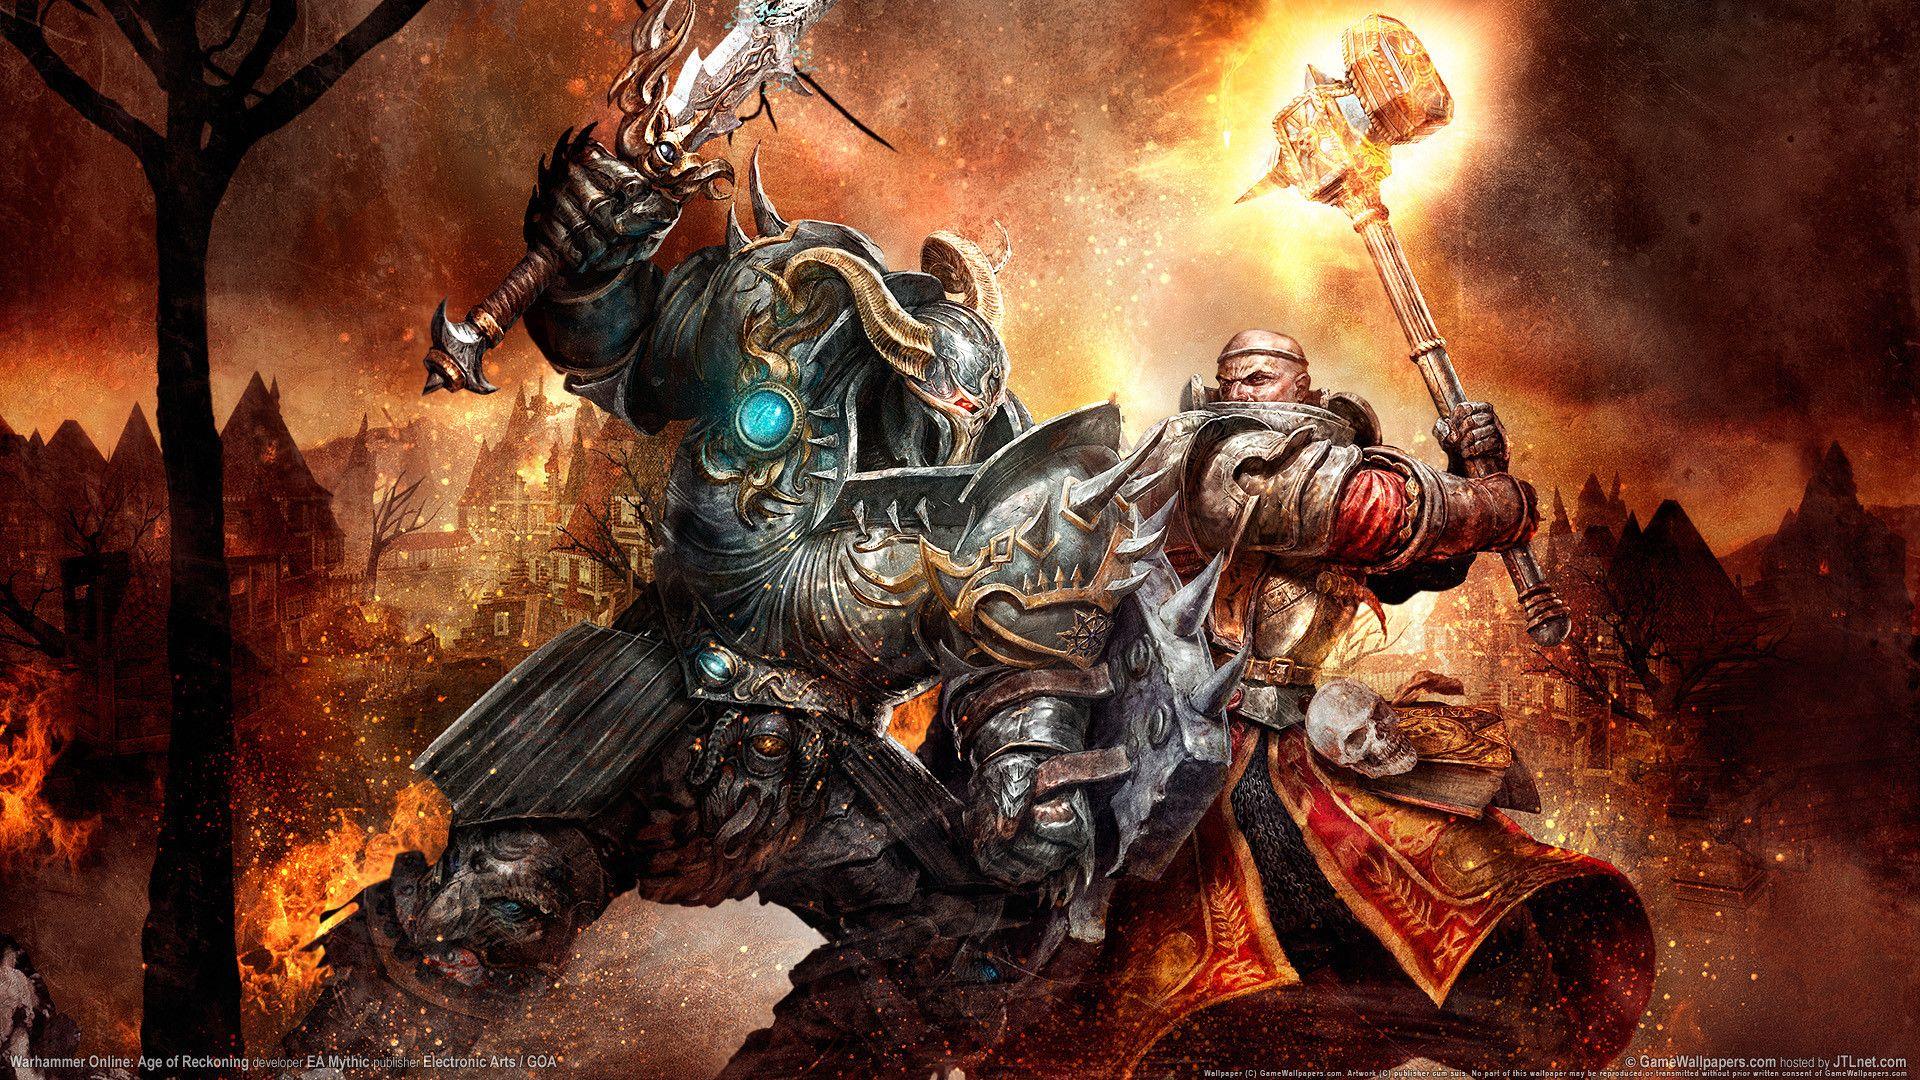 Warhammer Fantasy Wallpapers - Top Free Warhammer Fantasy Backgrounds